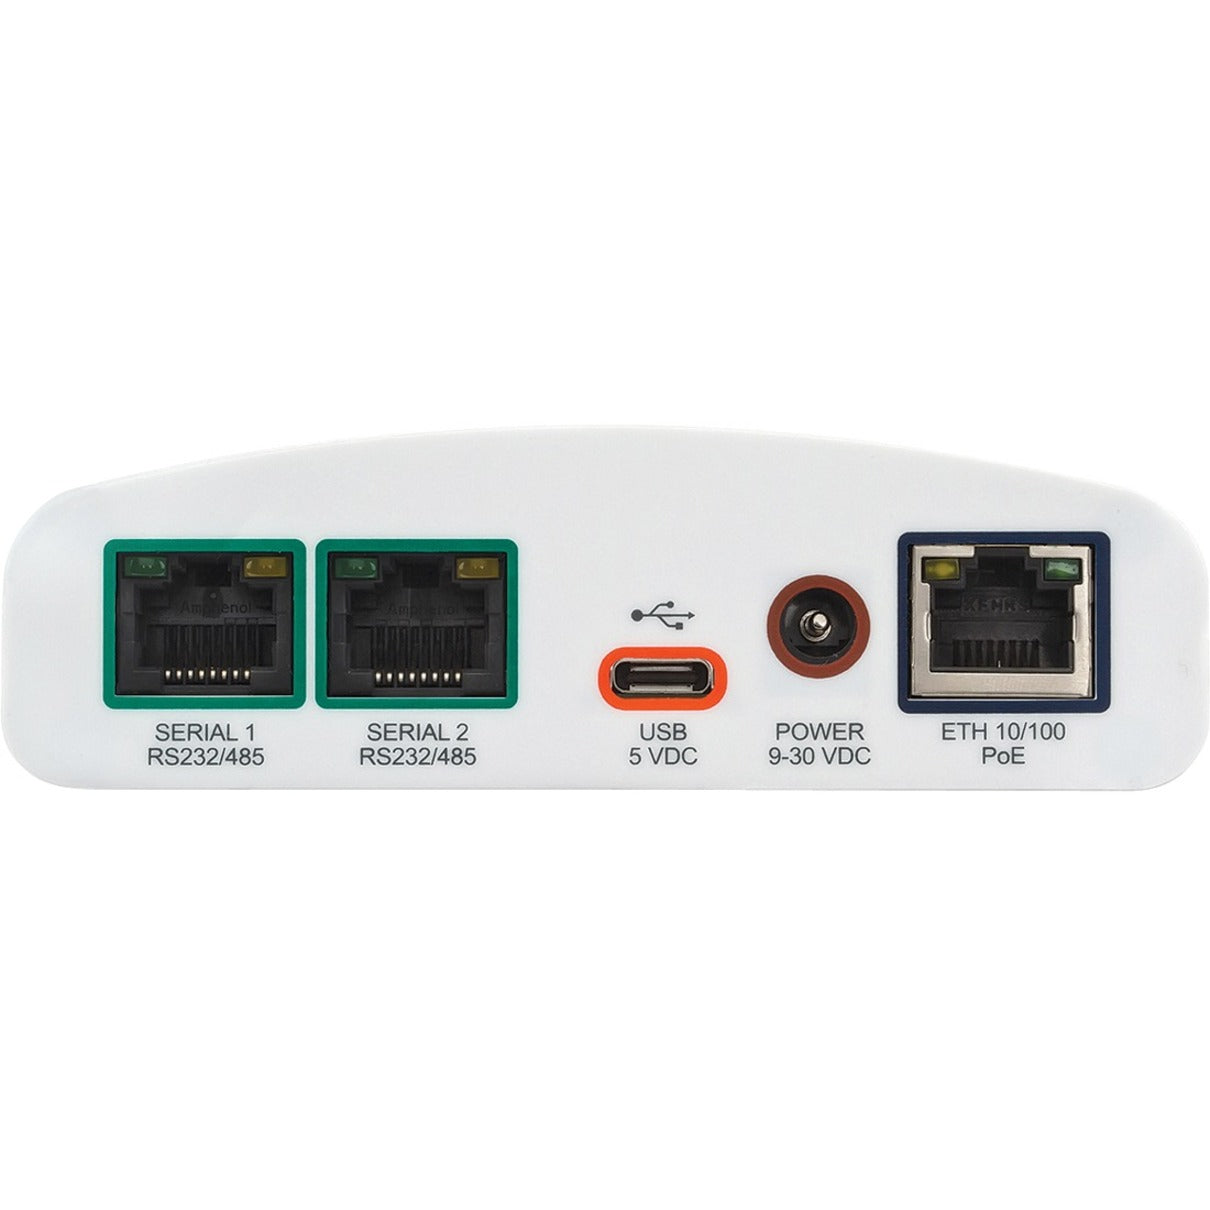 Lantronix SGX5150000US SGX 5150 IoT Device Gateway, 11AC USB & Ethernet